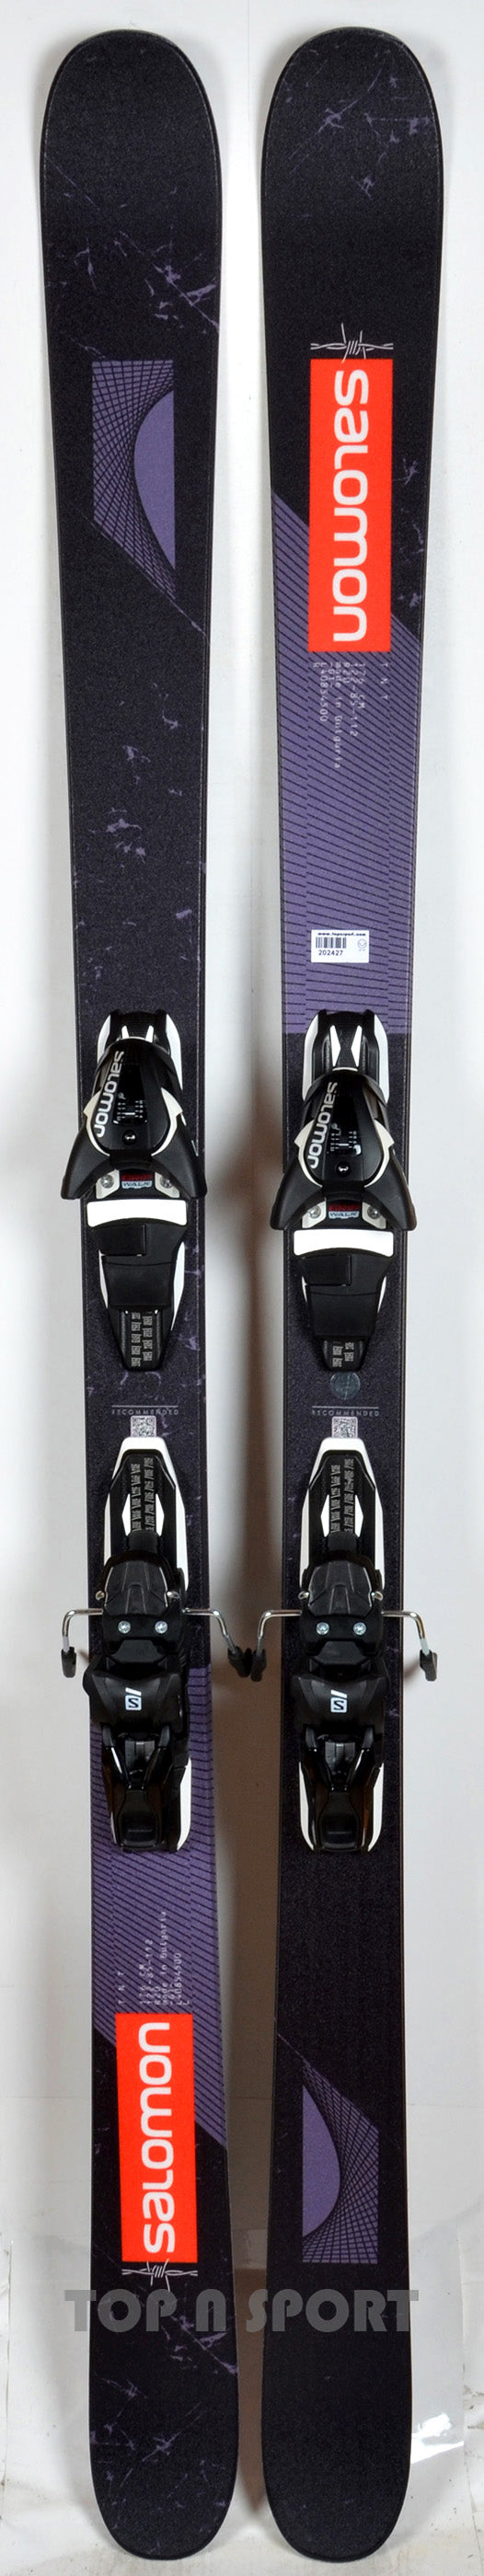 Pack neuf skis Salomon TNT black/grey avec fixations - neuf déstockage